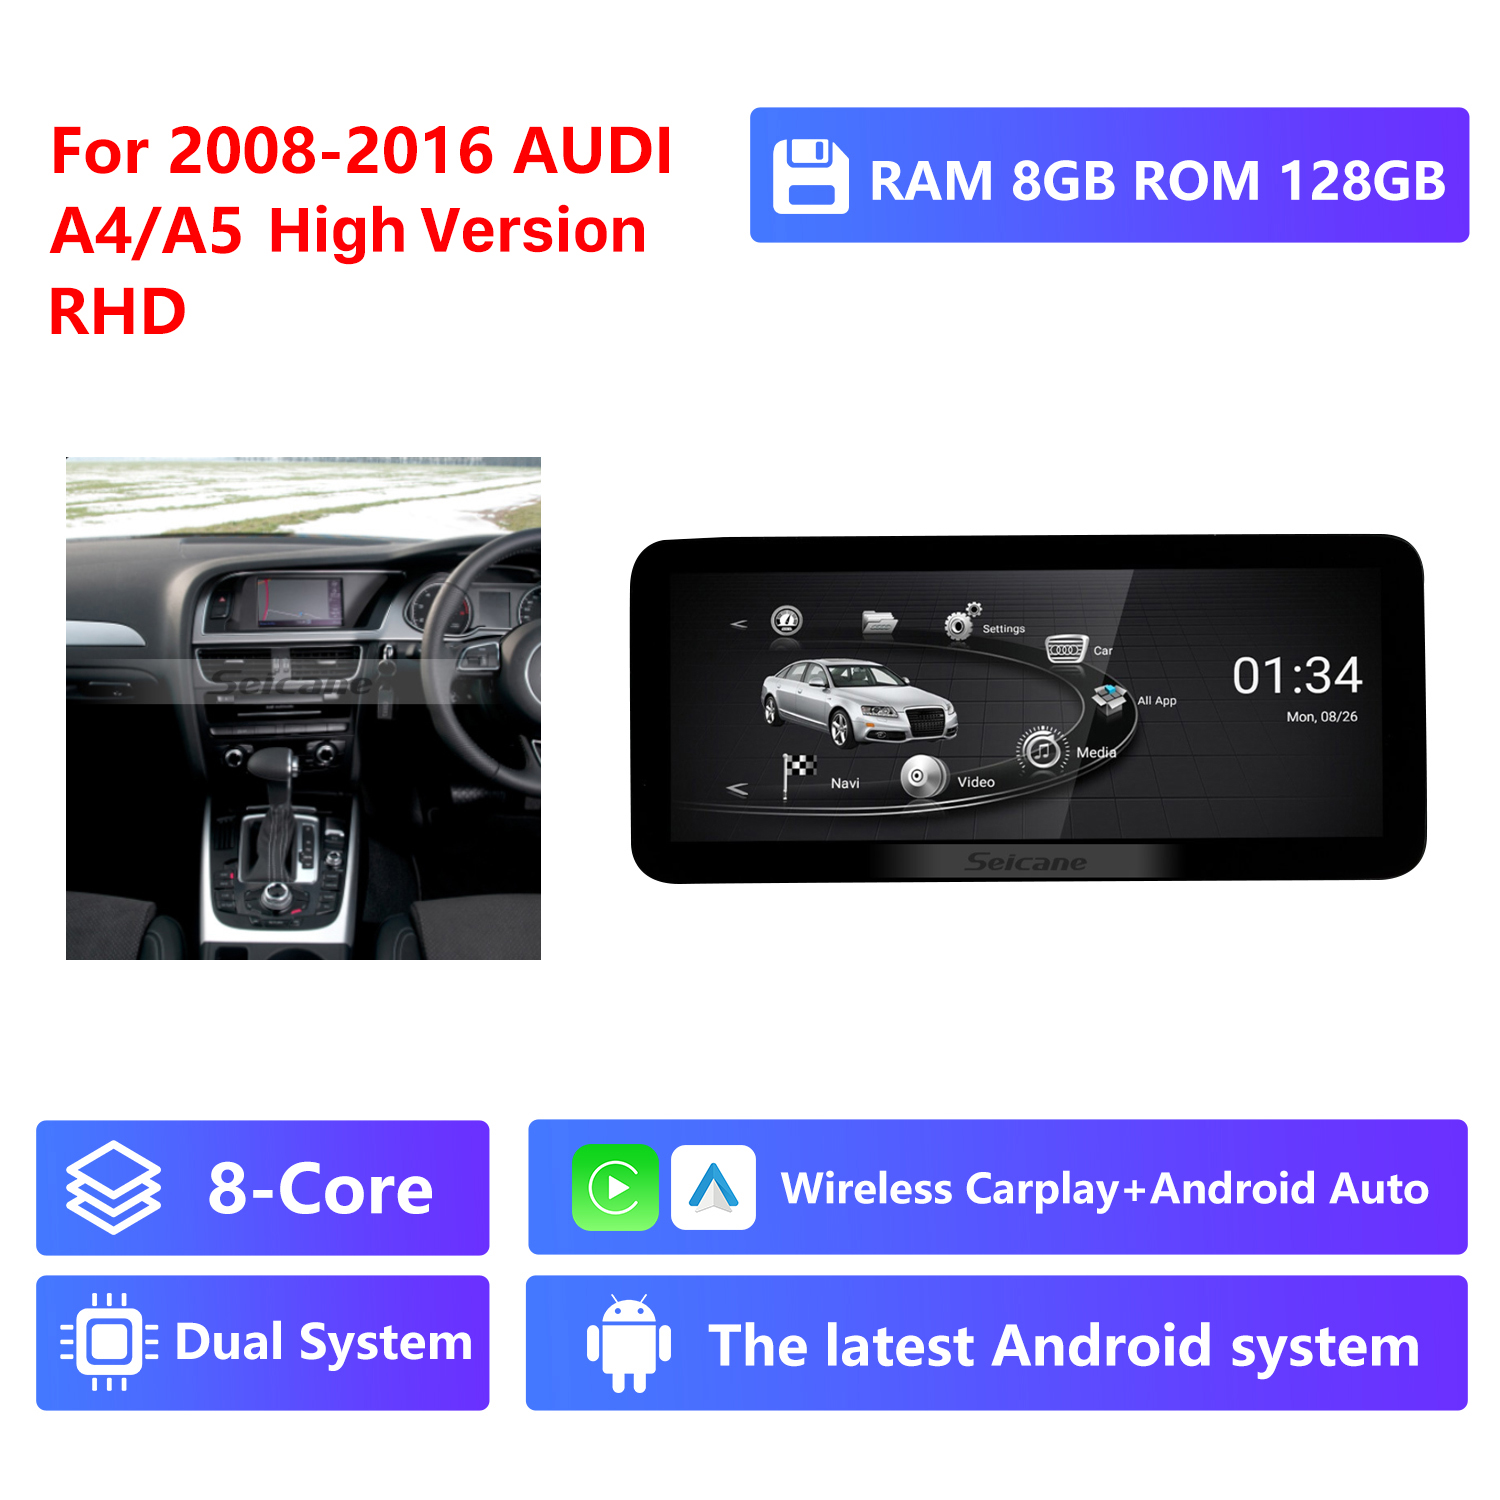 8-Core RAM 8G ROM 128G,2008-2016,High version,RHD